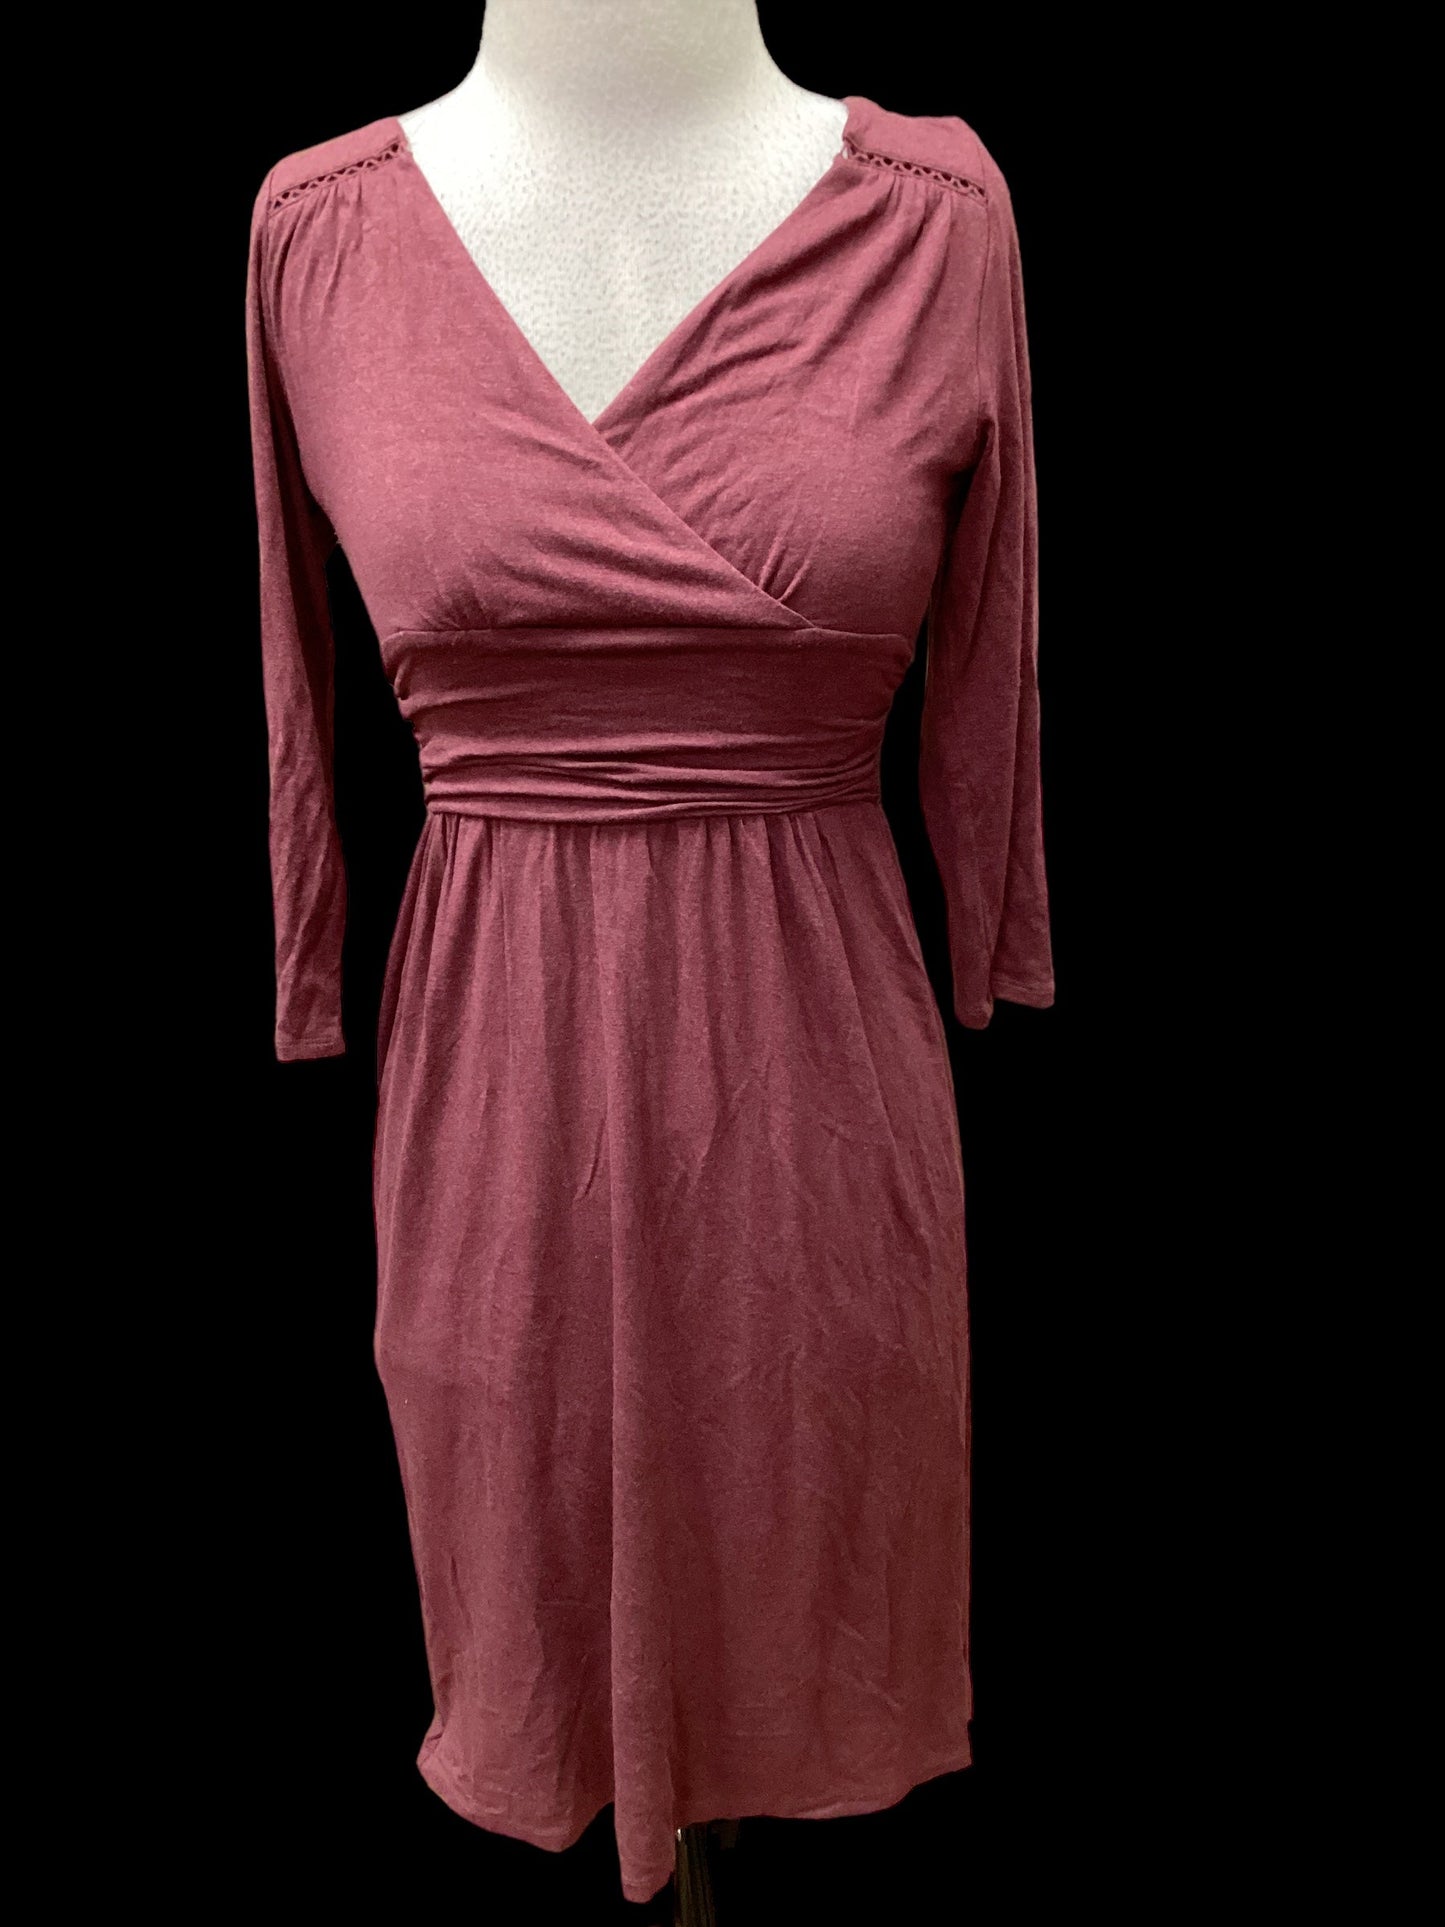 Dress Casual Midi By Maeve  Size: Xs